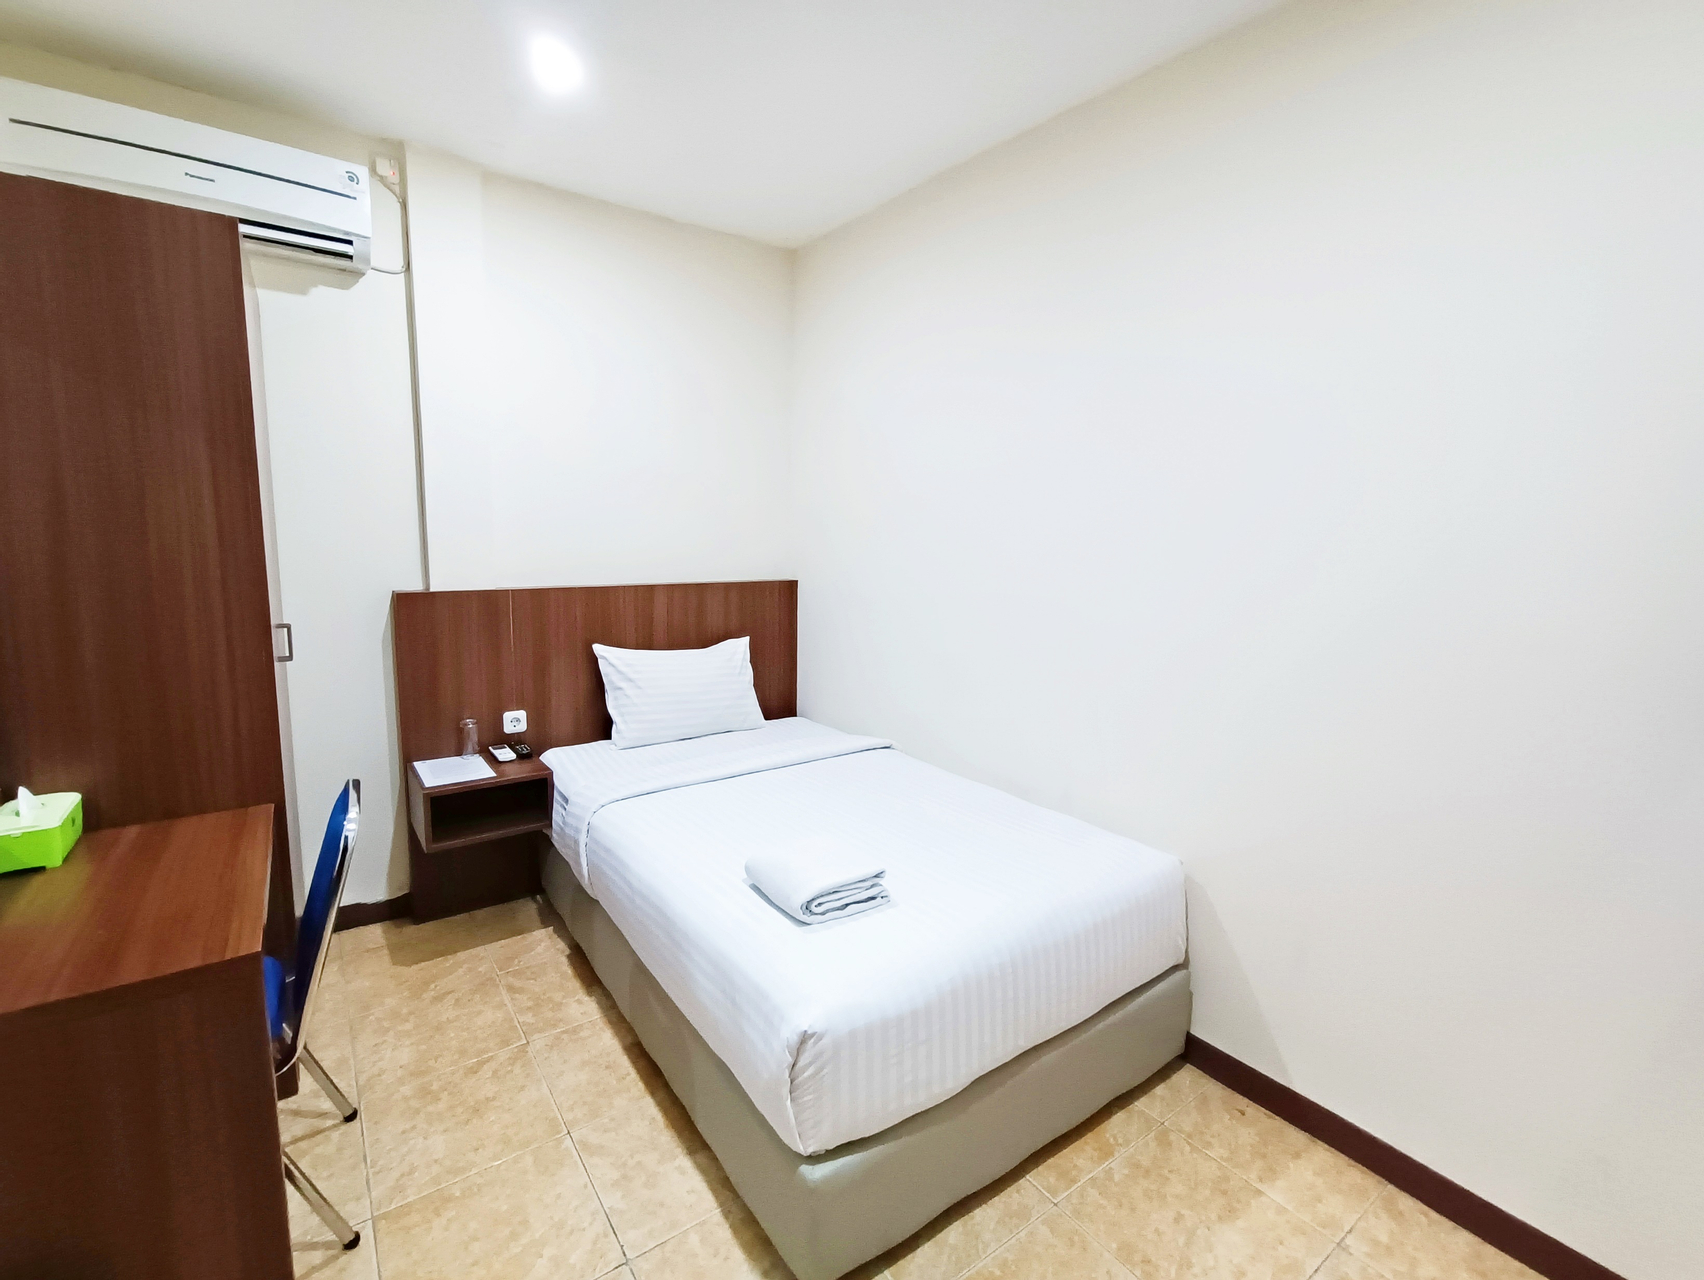 Bedroom 3, Bina Darma Hotel Palembang, Palembang